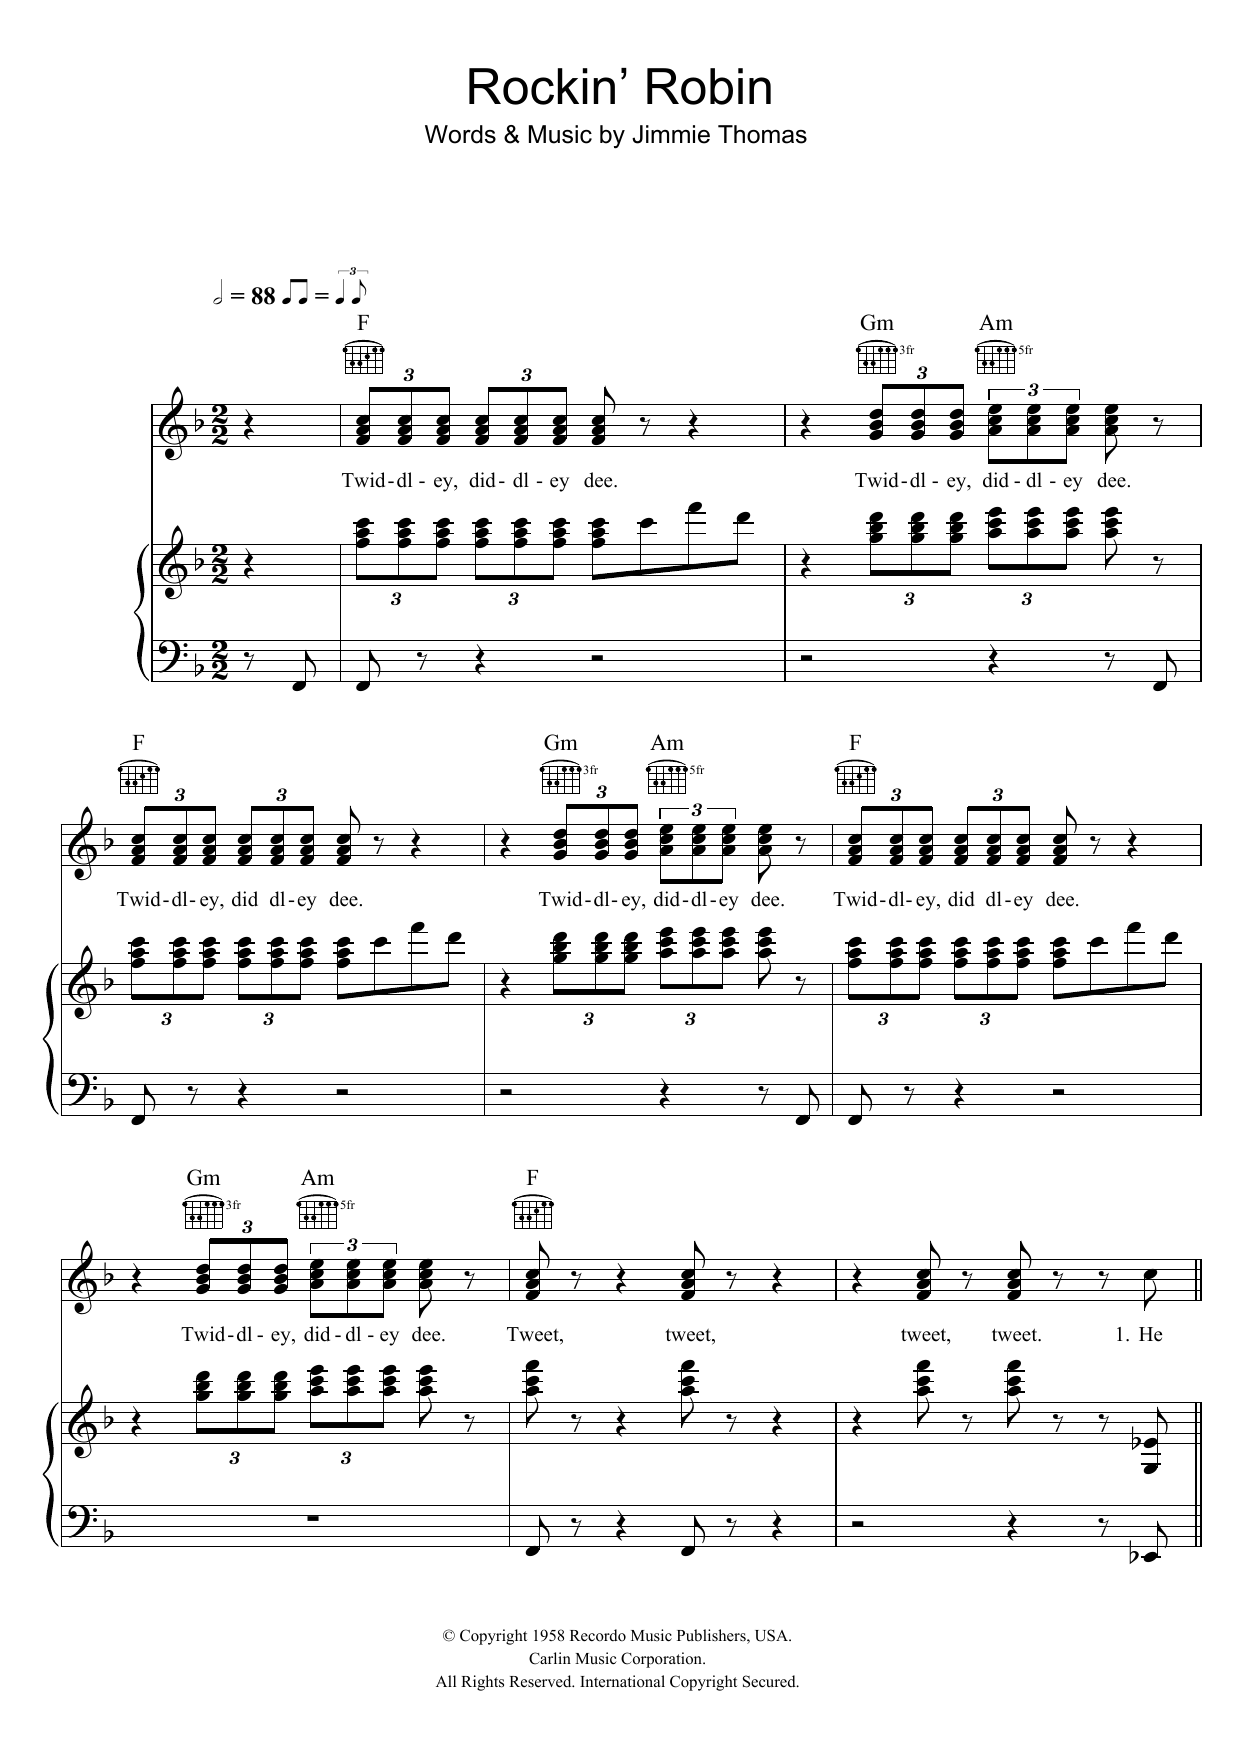 J. Thomas Rockin' Robin Sheet Music Notes & Chords for Viola - Download or Print PDF